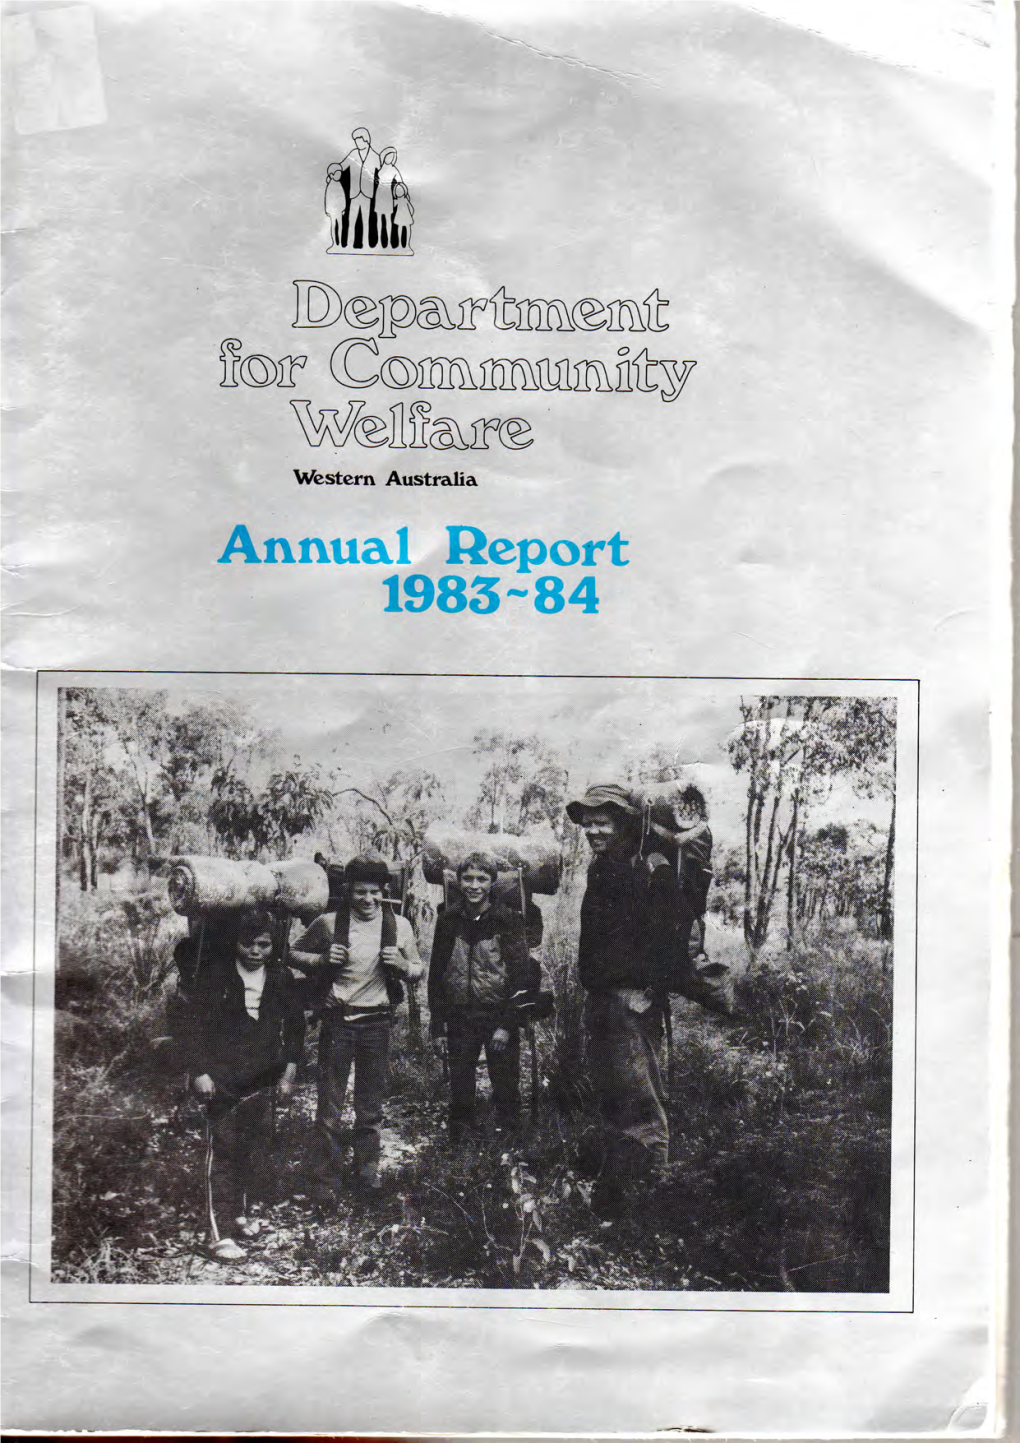 Annual Report 1983-84 Wtlrar: SF^VICES Western I.'31 \Pv Australia T5 JUL 1937 1983 - 1984 , ™.403 Oxford St